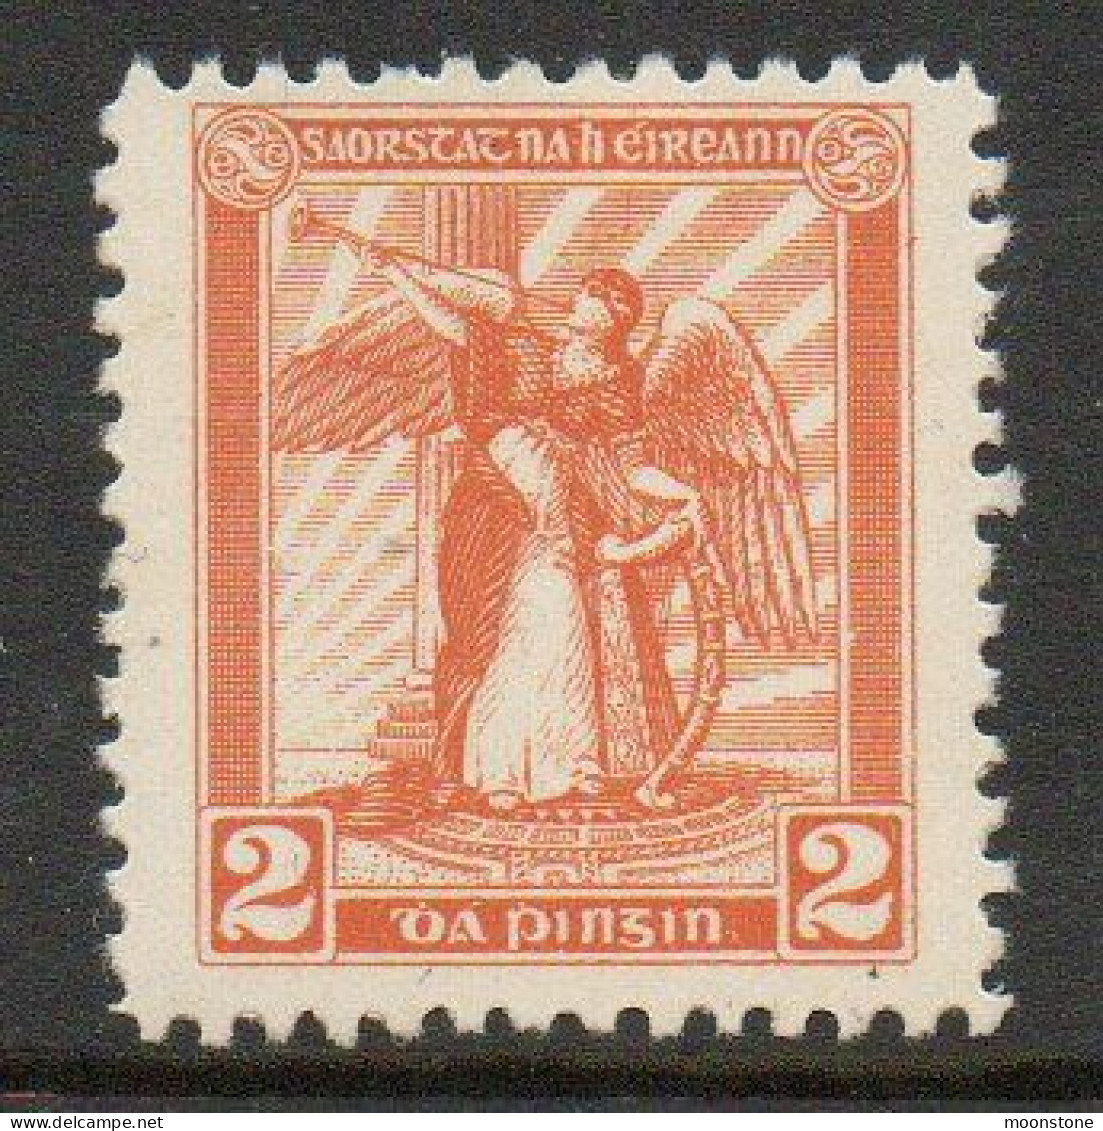 Ireland 1922 Dollard Printing House Stamp Essay In Yellow-orange, Lightly Hinged Mint - Unused Stamps